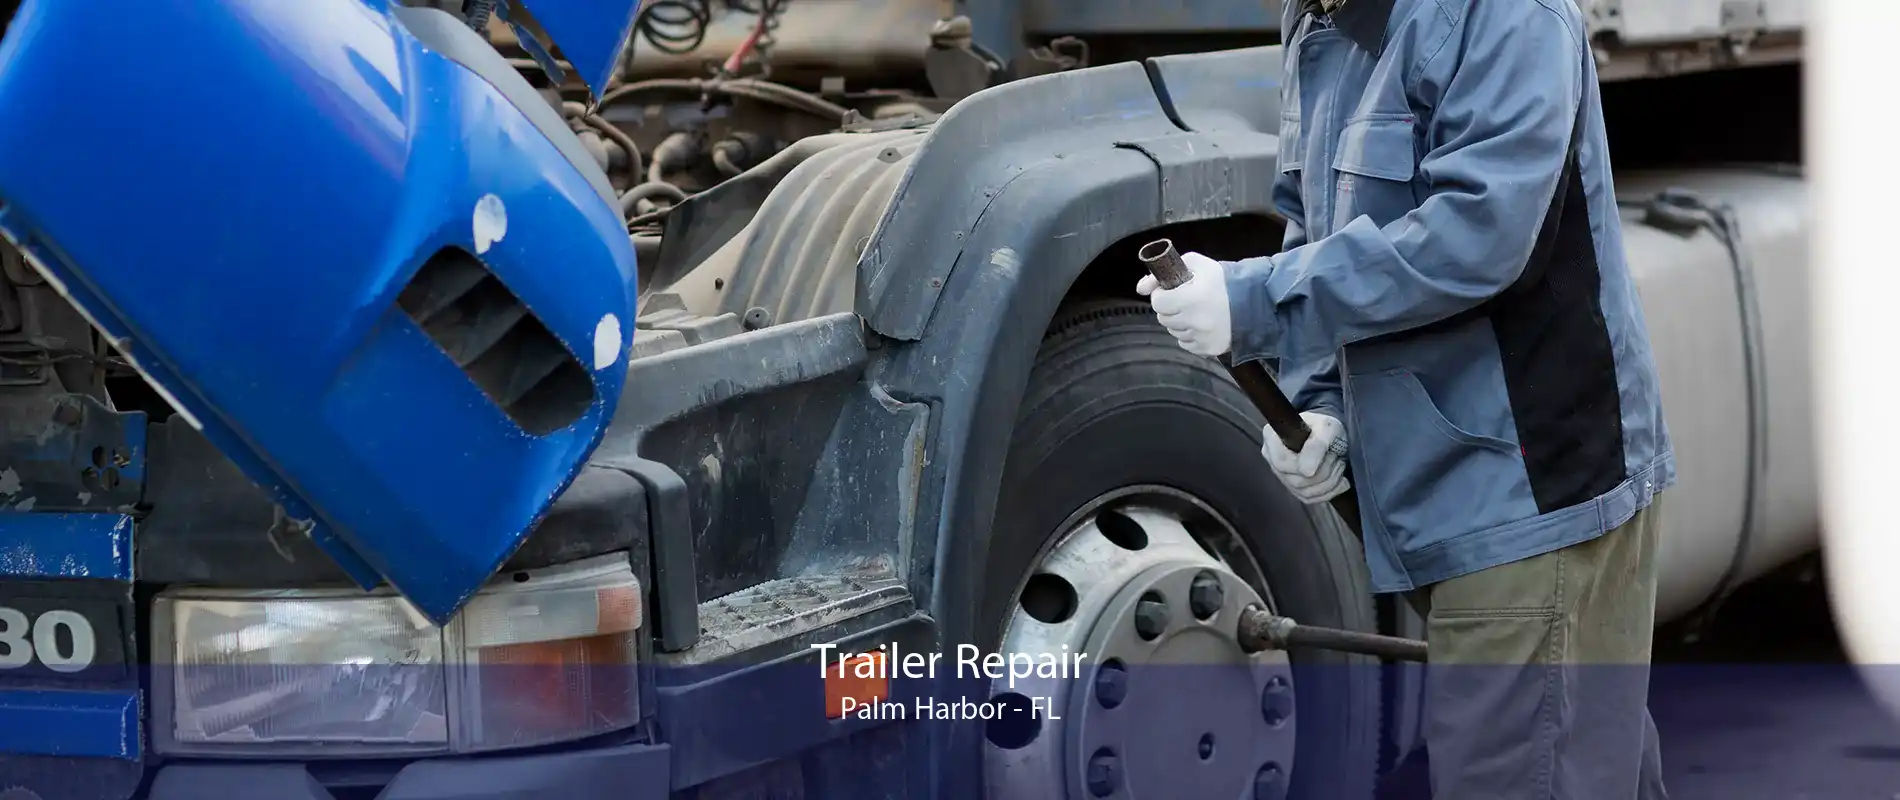 Trailer Repair Palm Harbor - FL